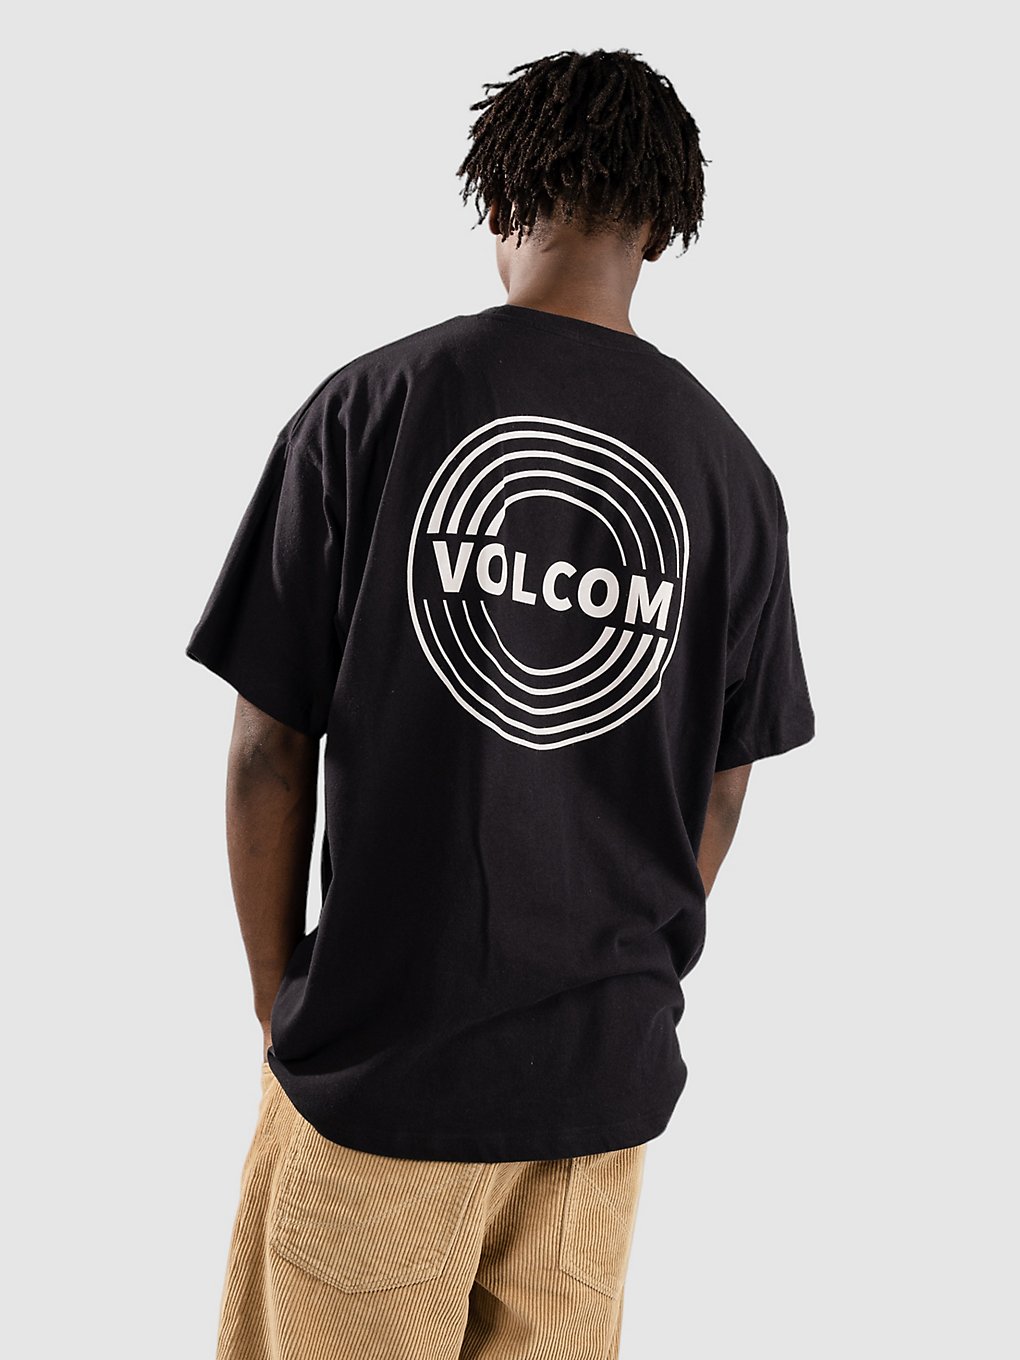 Volcom Switchflip Lse T-Shirt black kaufen